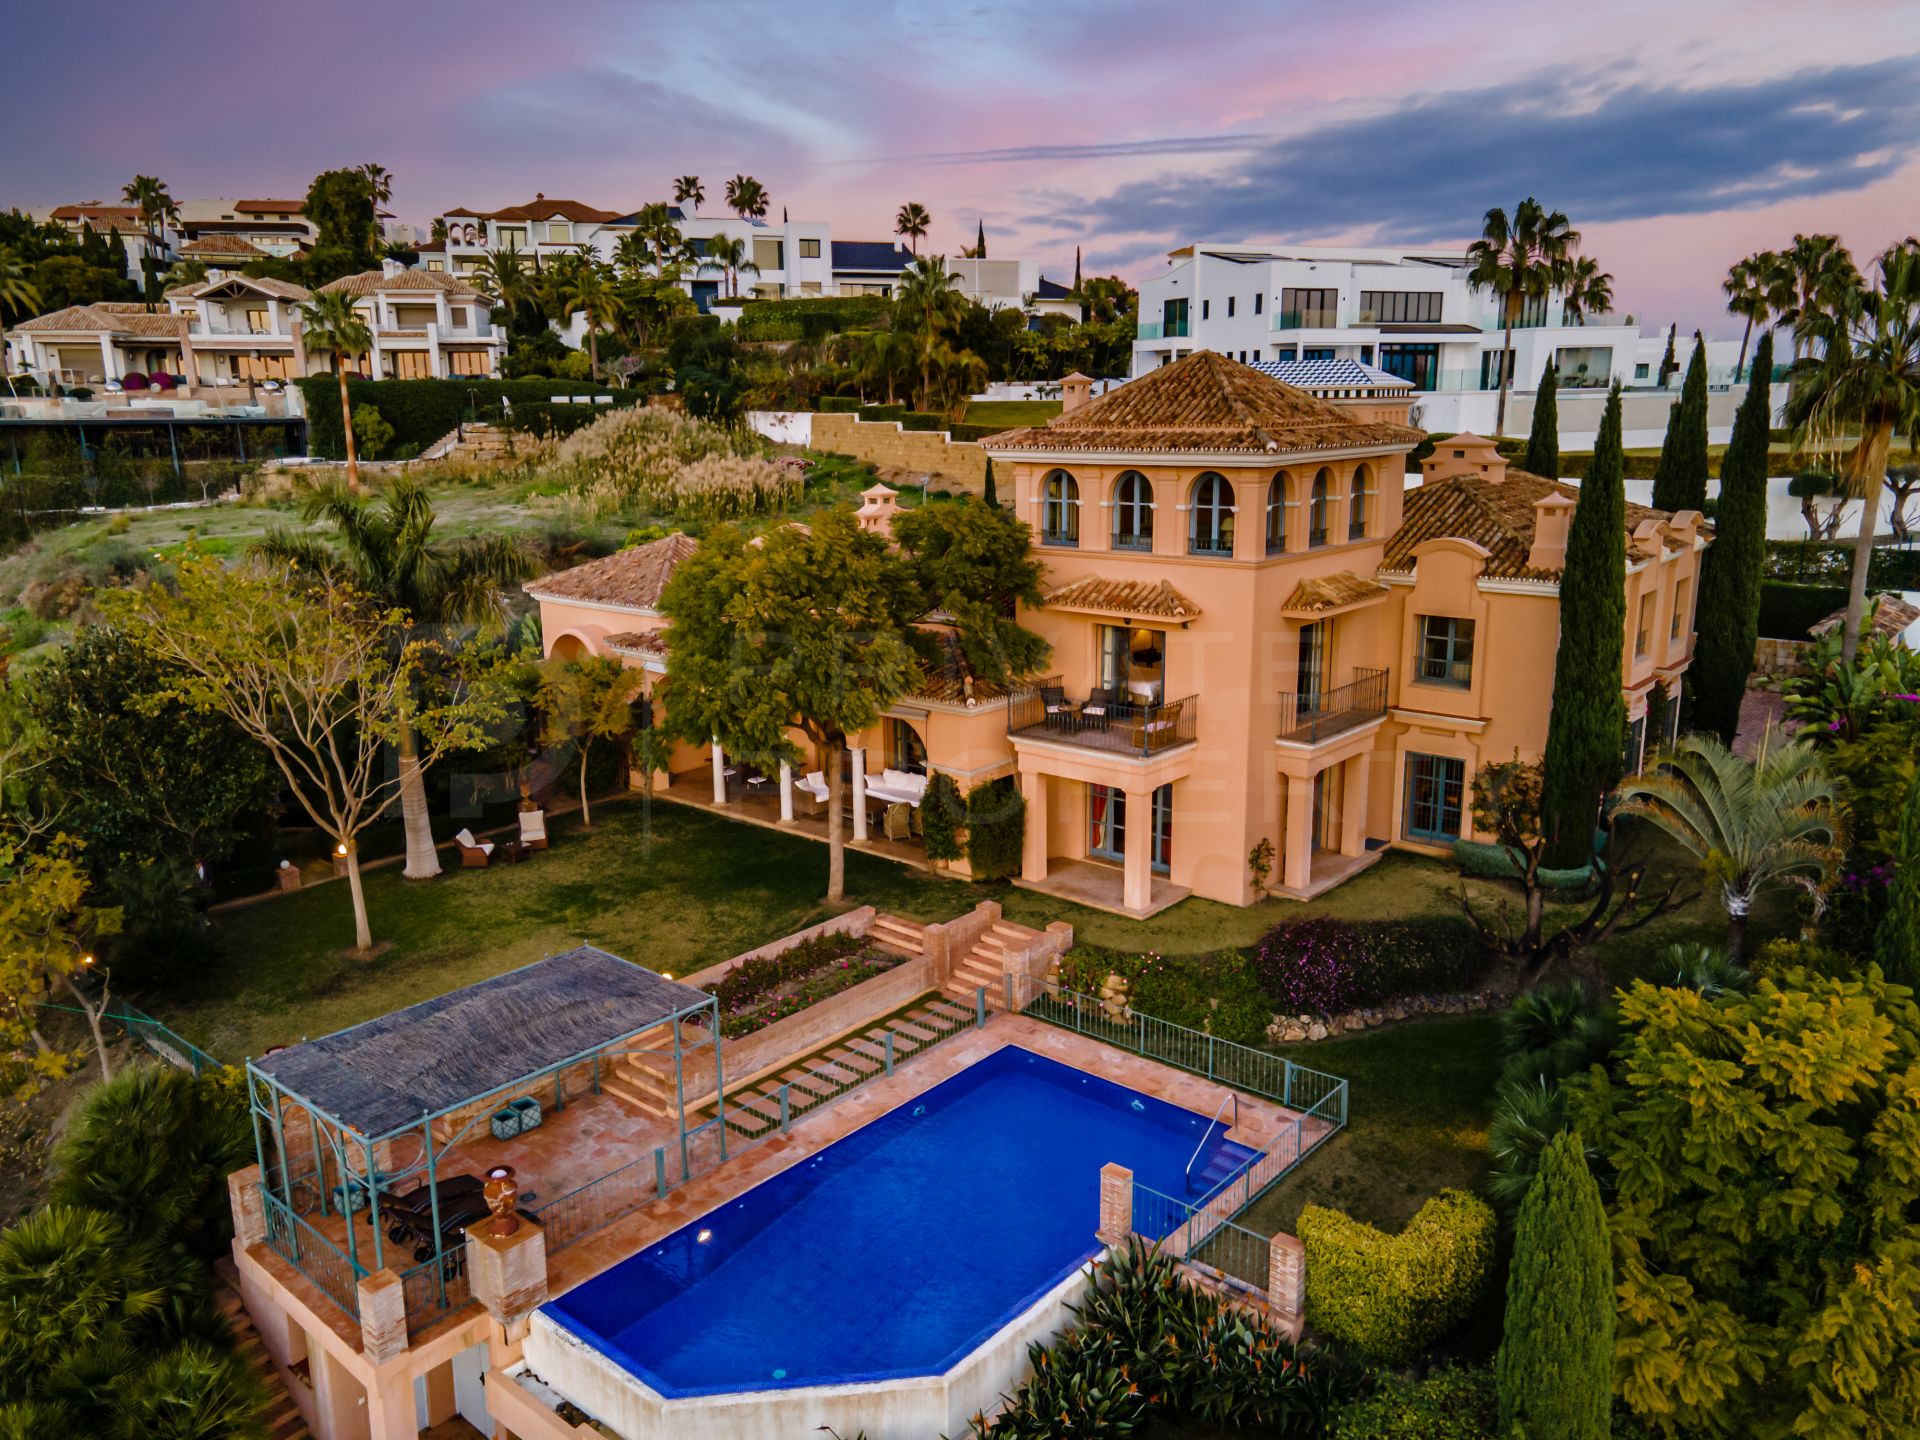 Immaculately presented villa in Los Flamingos